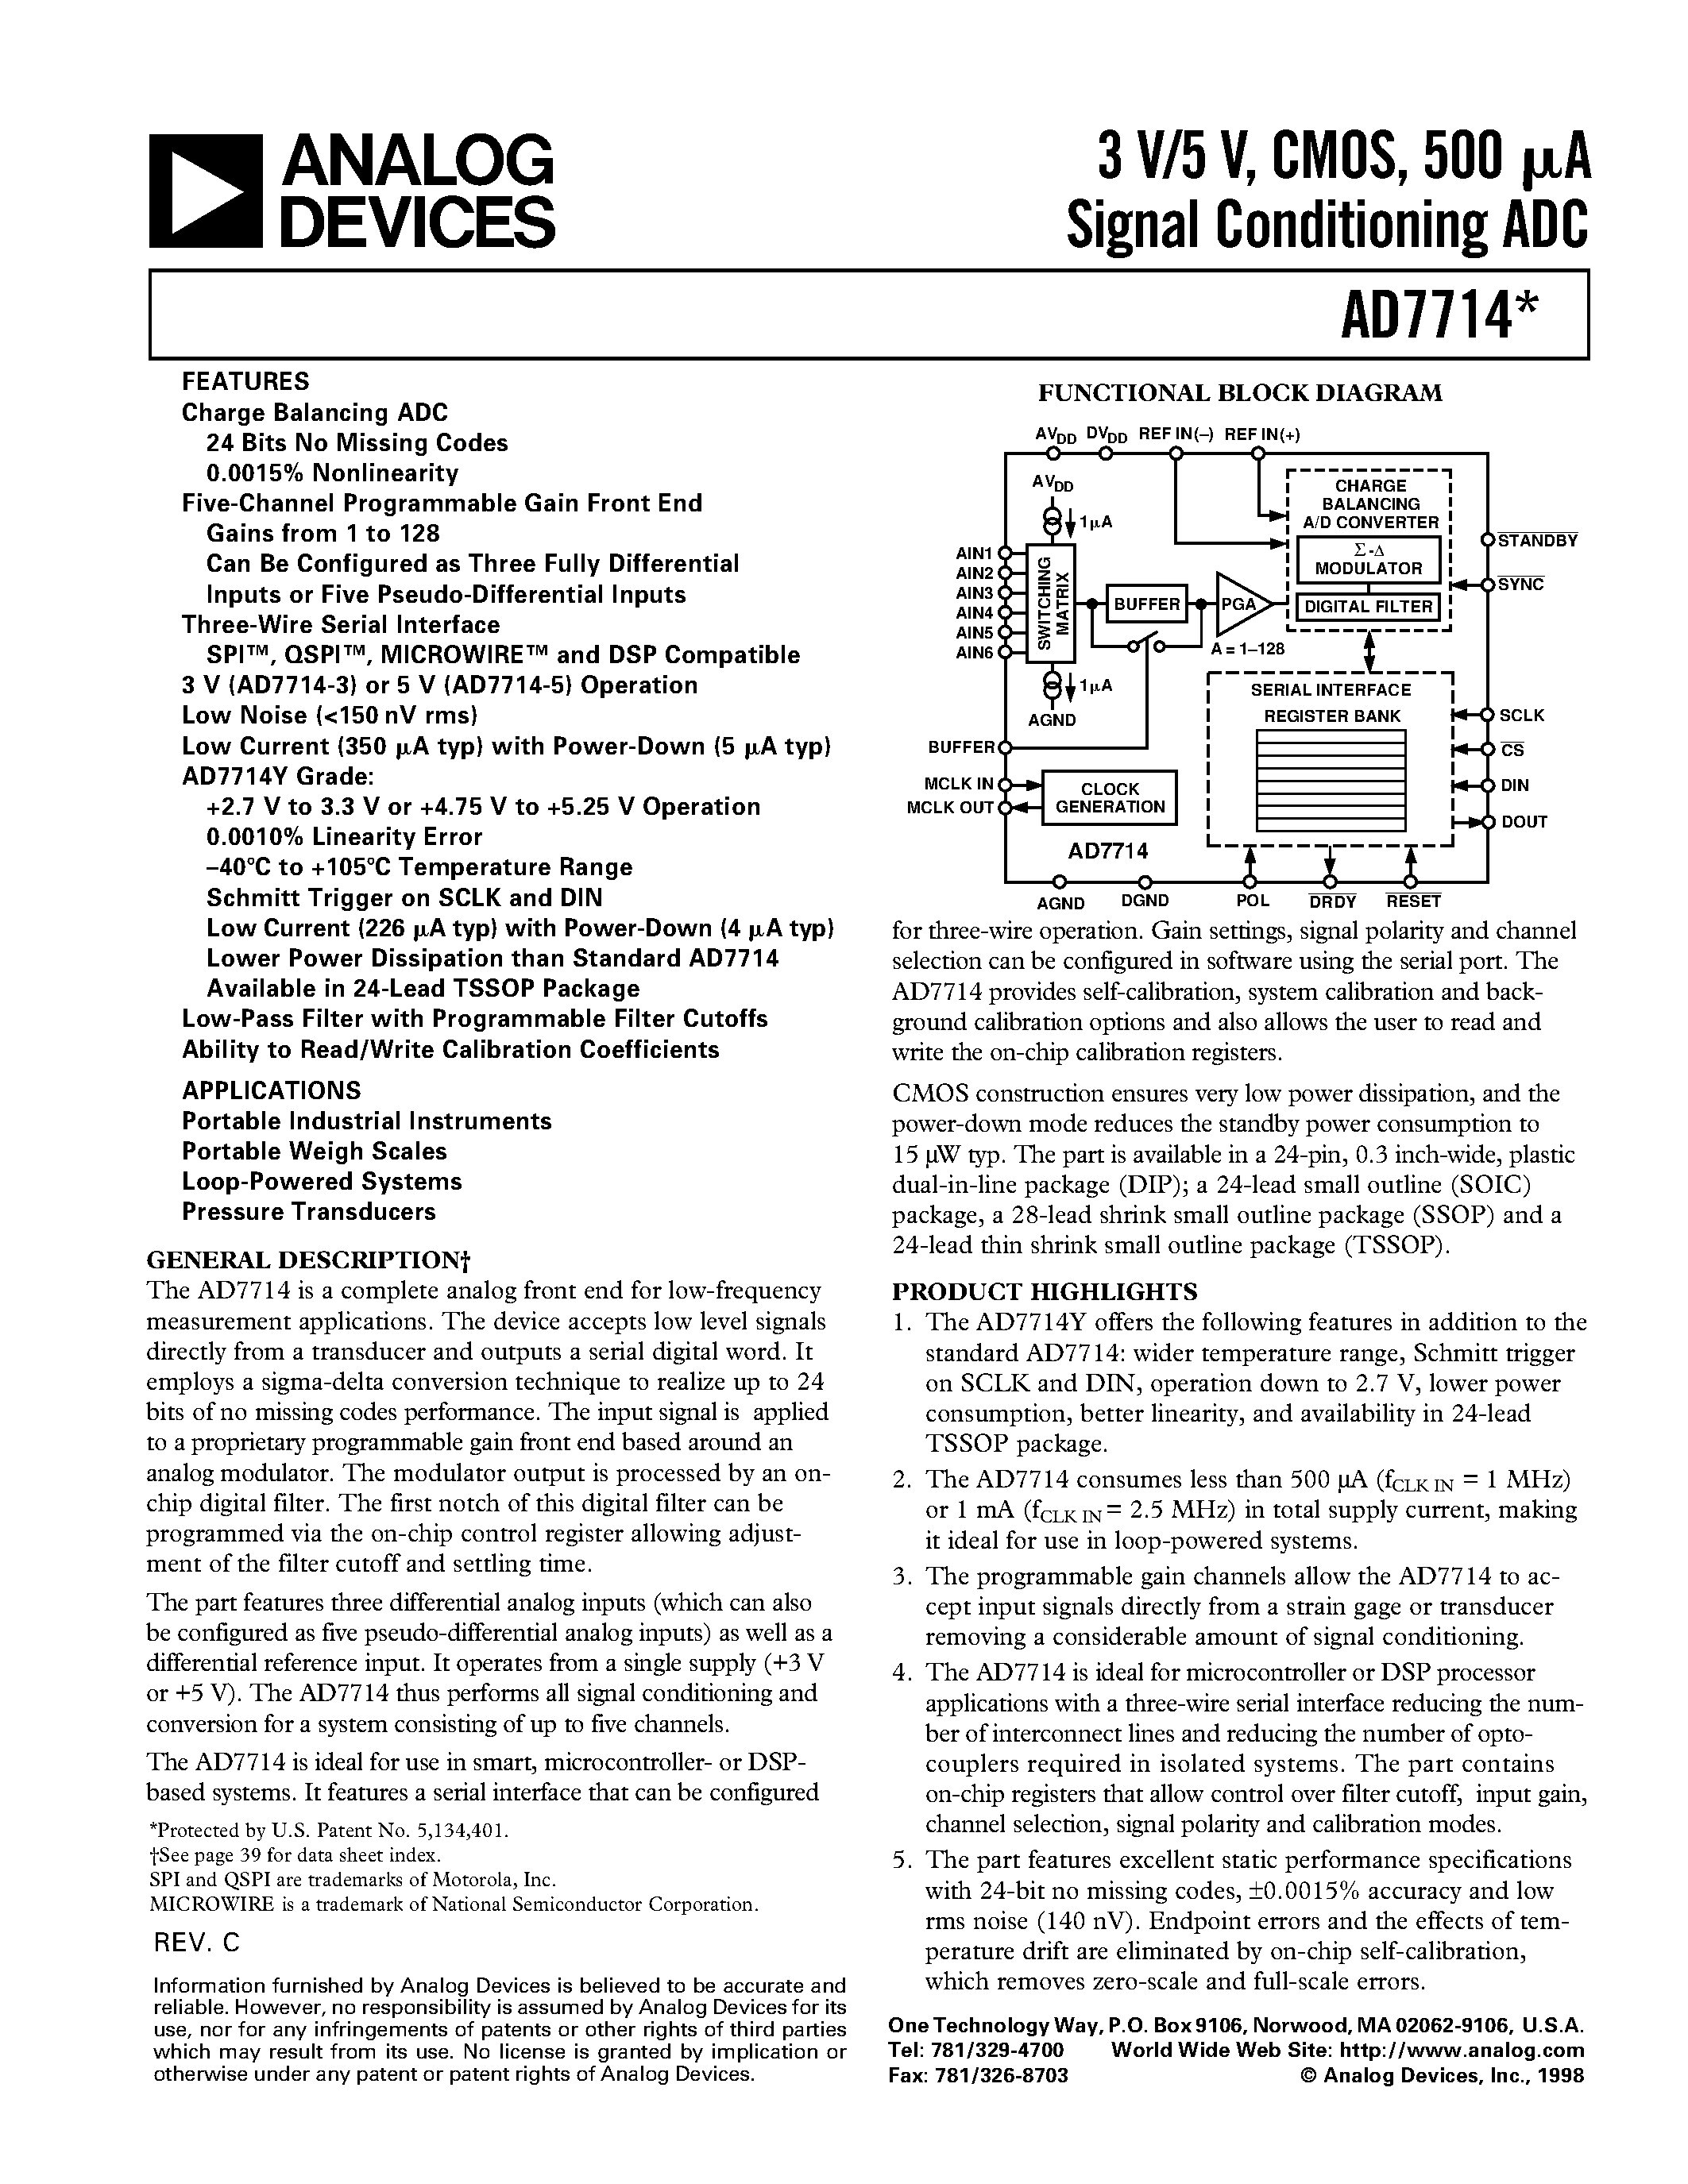 Datasheet AD7714ARS-5 - 3 V/5 V/ CMOS/ 500 uA Signal Conditioning ADC page 1